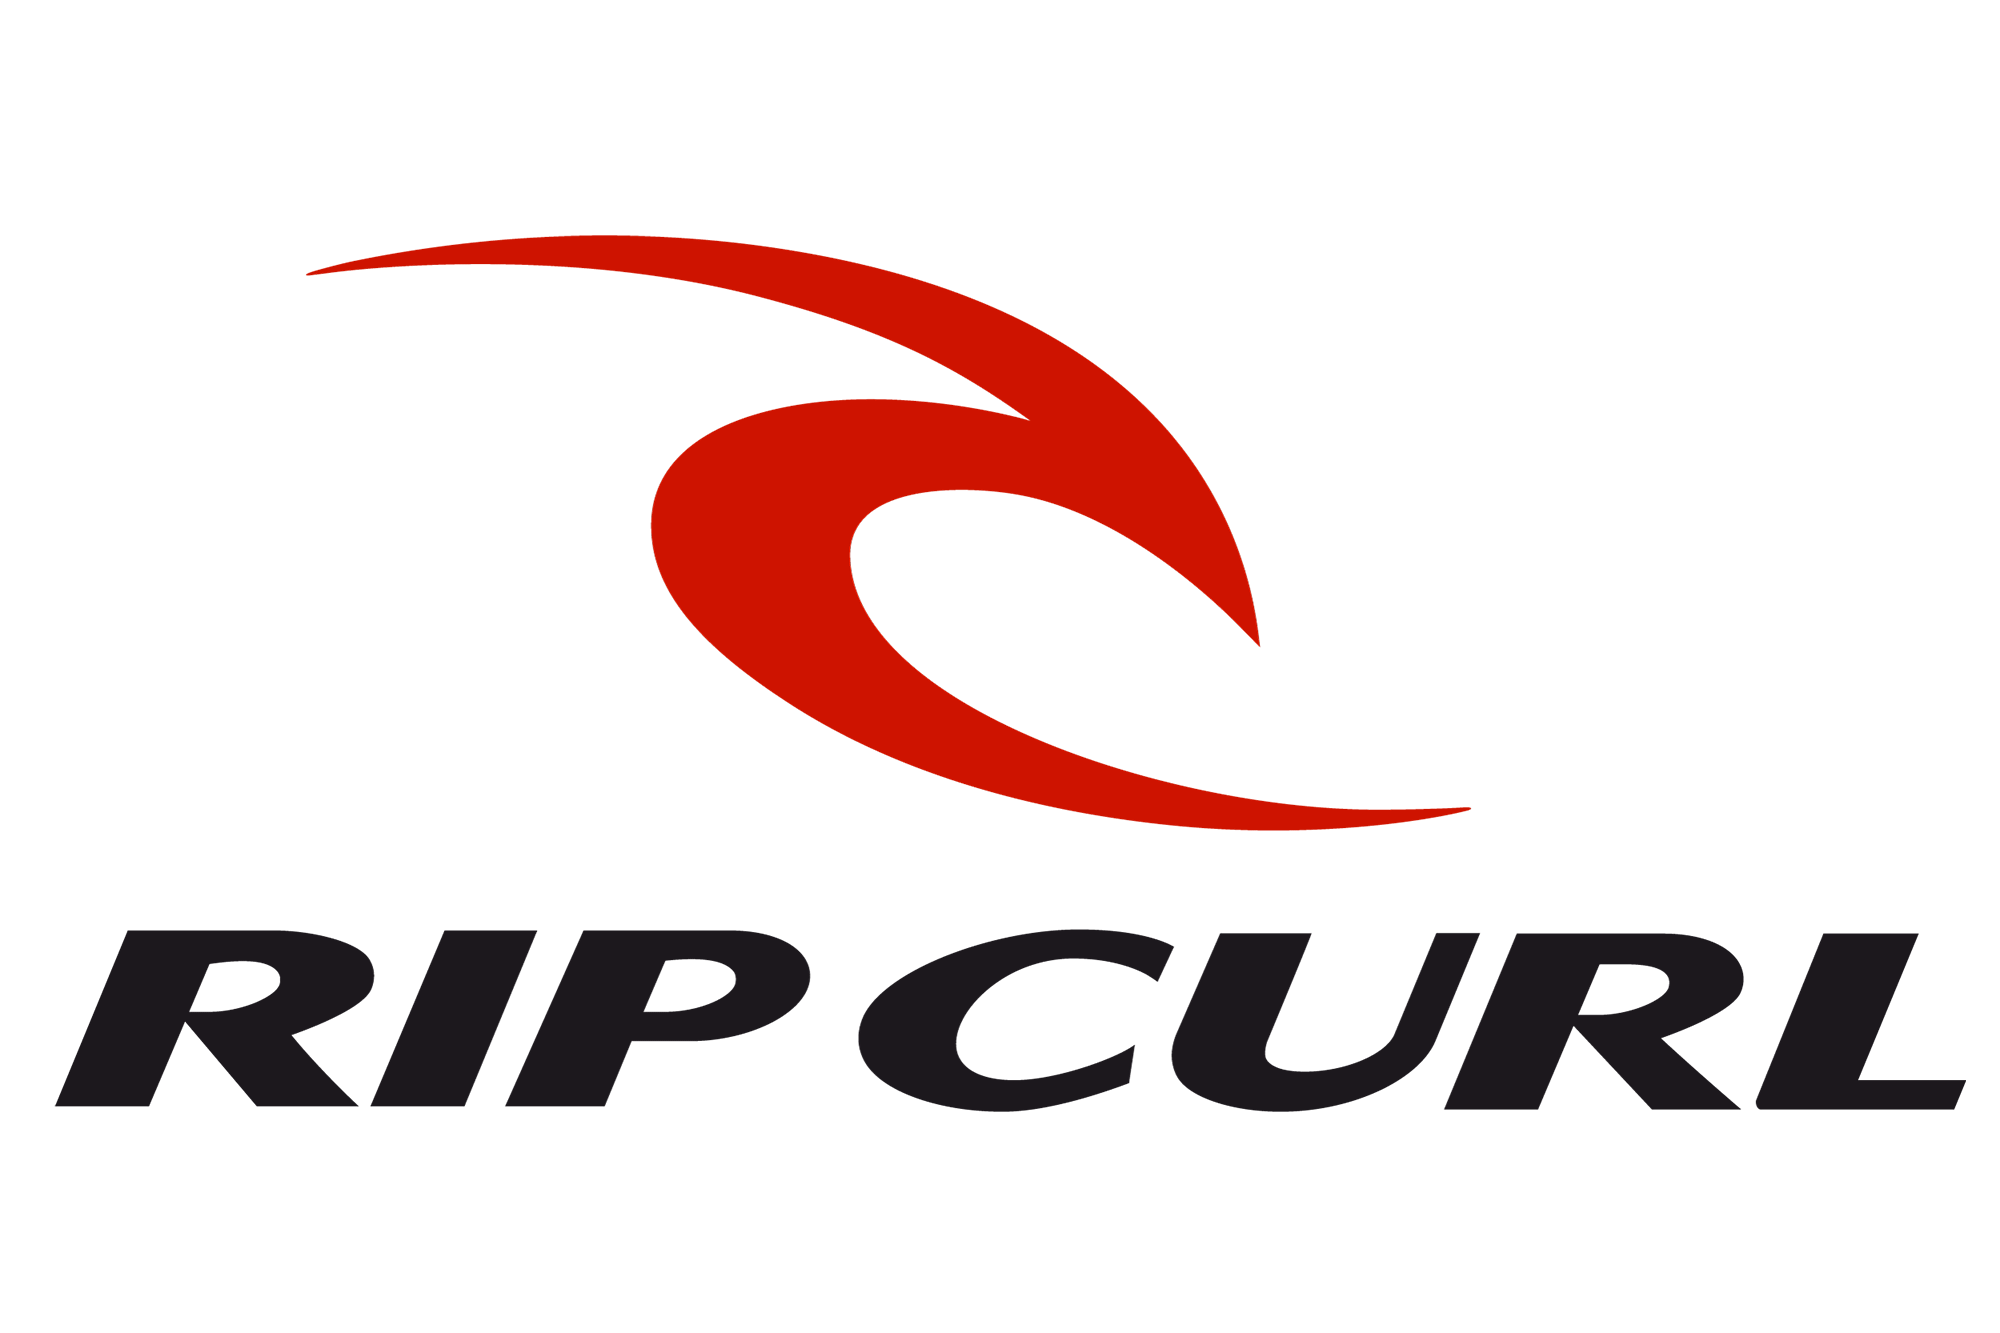 rip curl